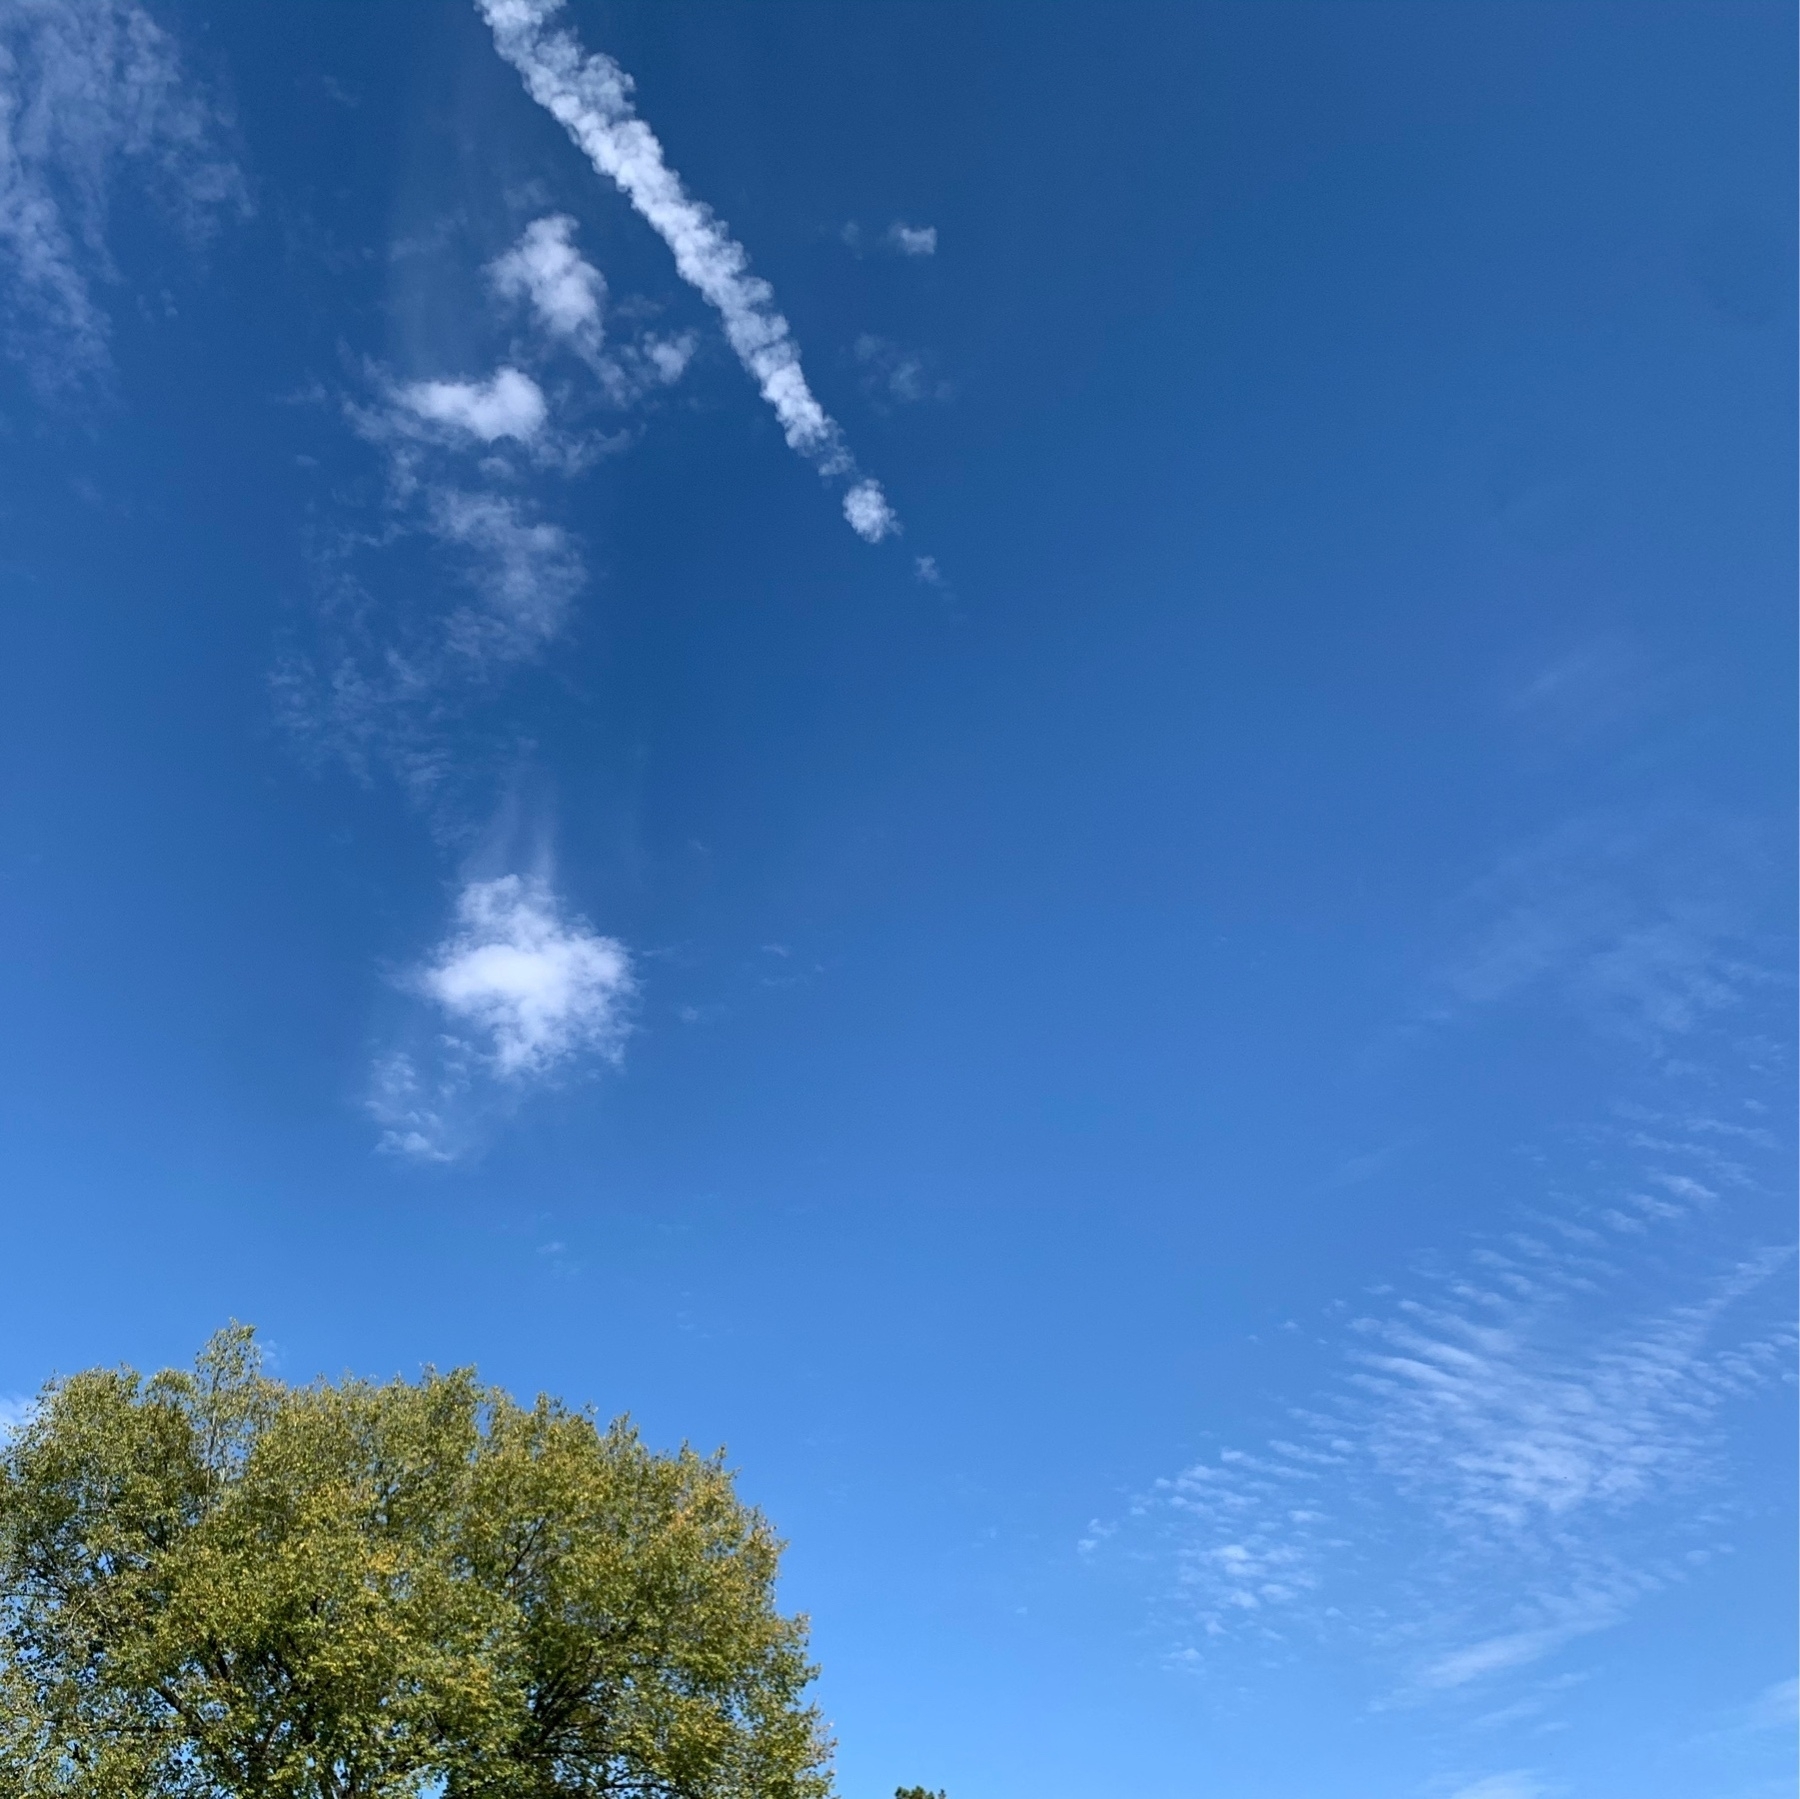 Clouds against a bright blue sky